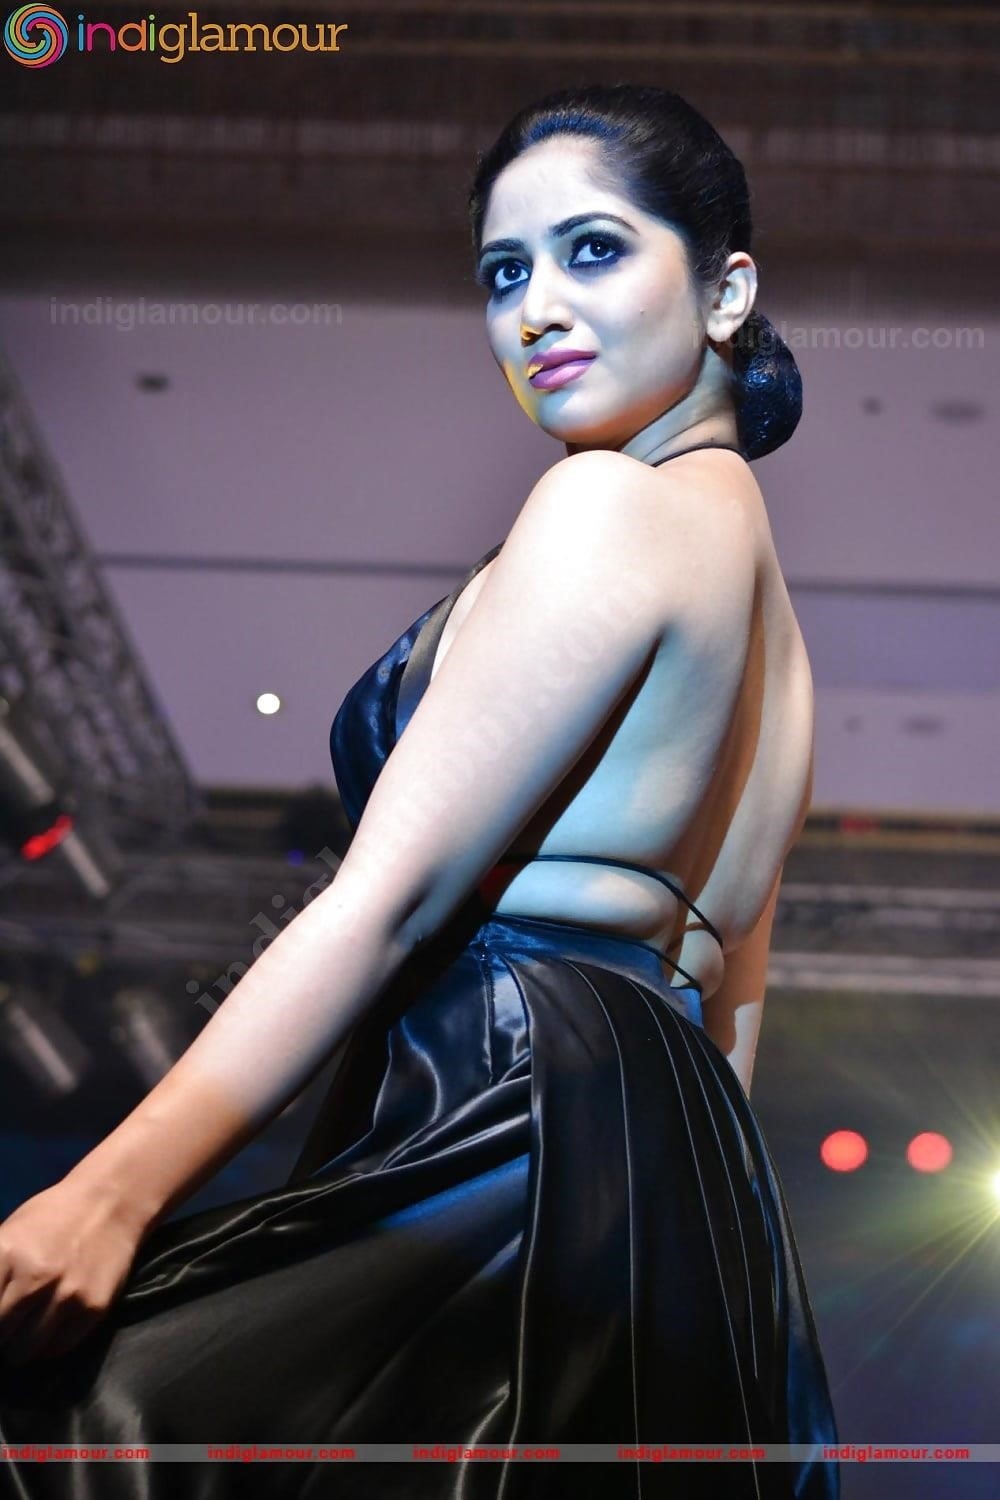 Saut Xxx - South indian actress hot pics Porn Pics, Sex Photos, XXX Images - Refedbc